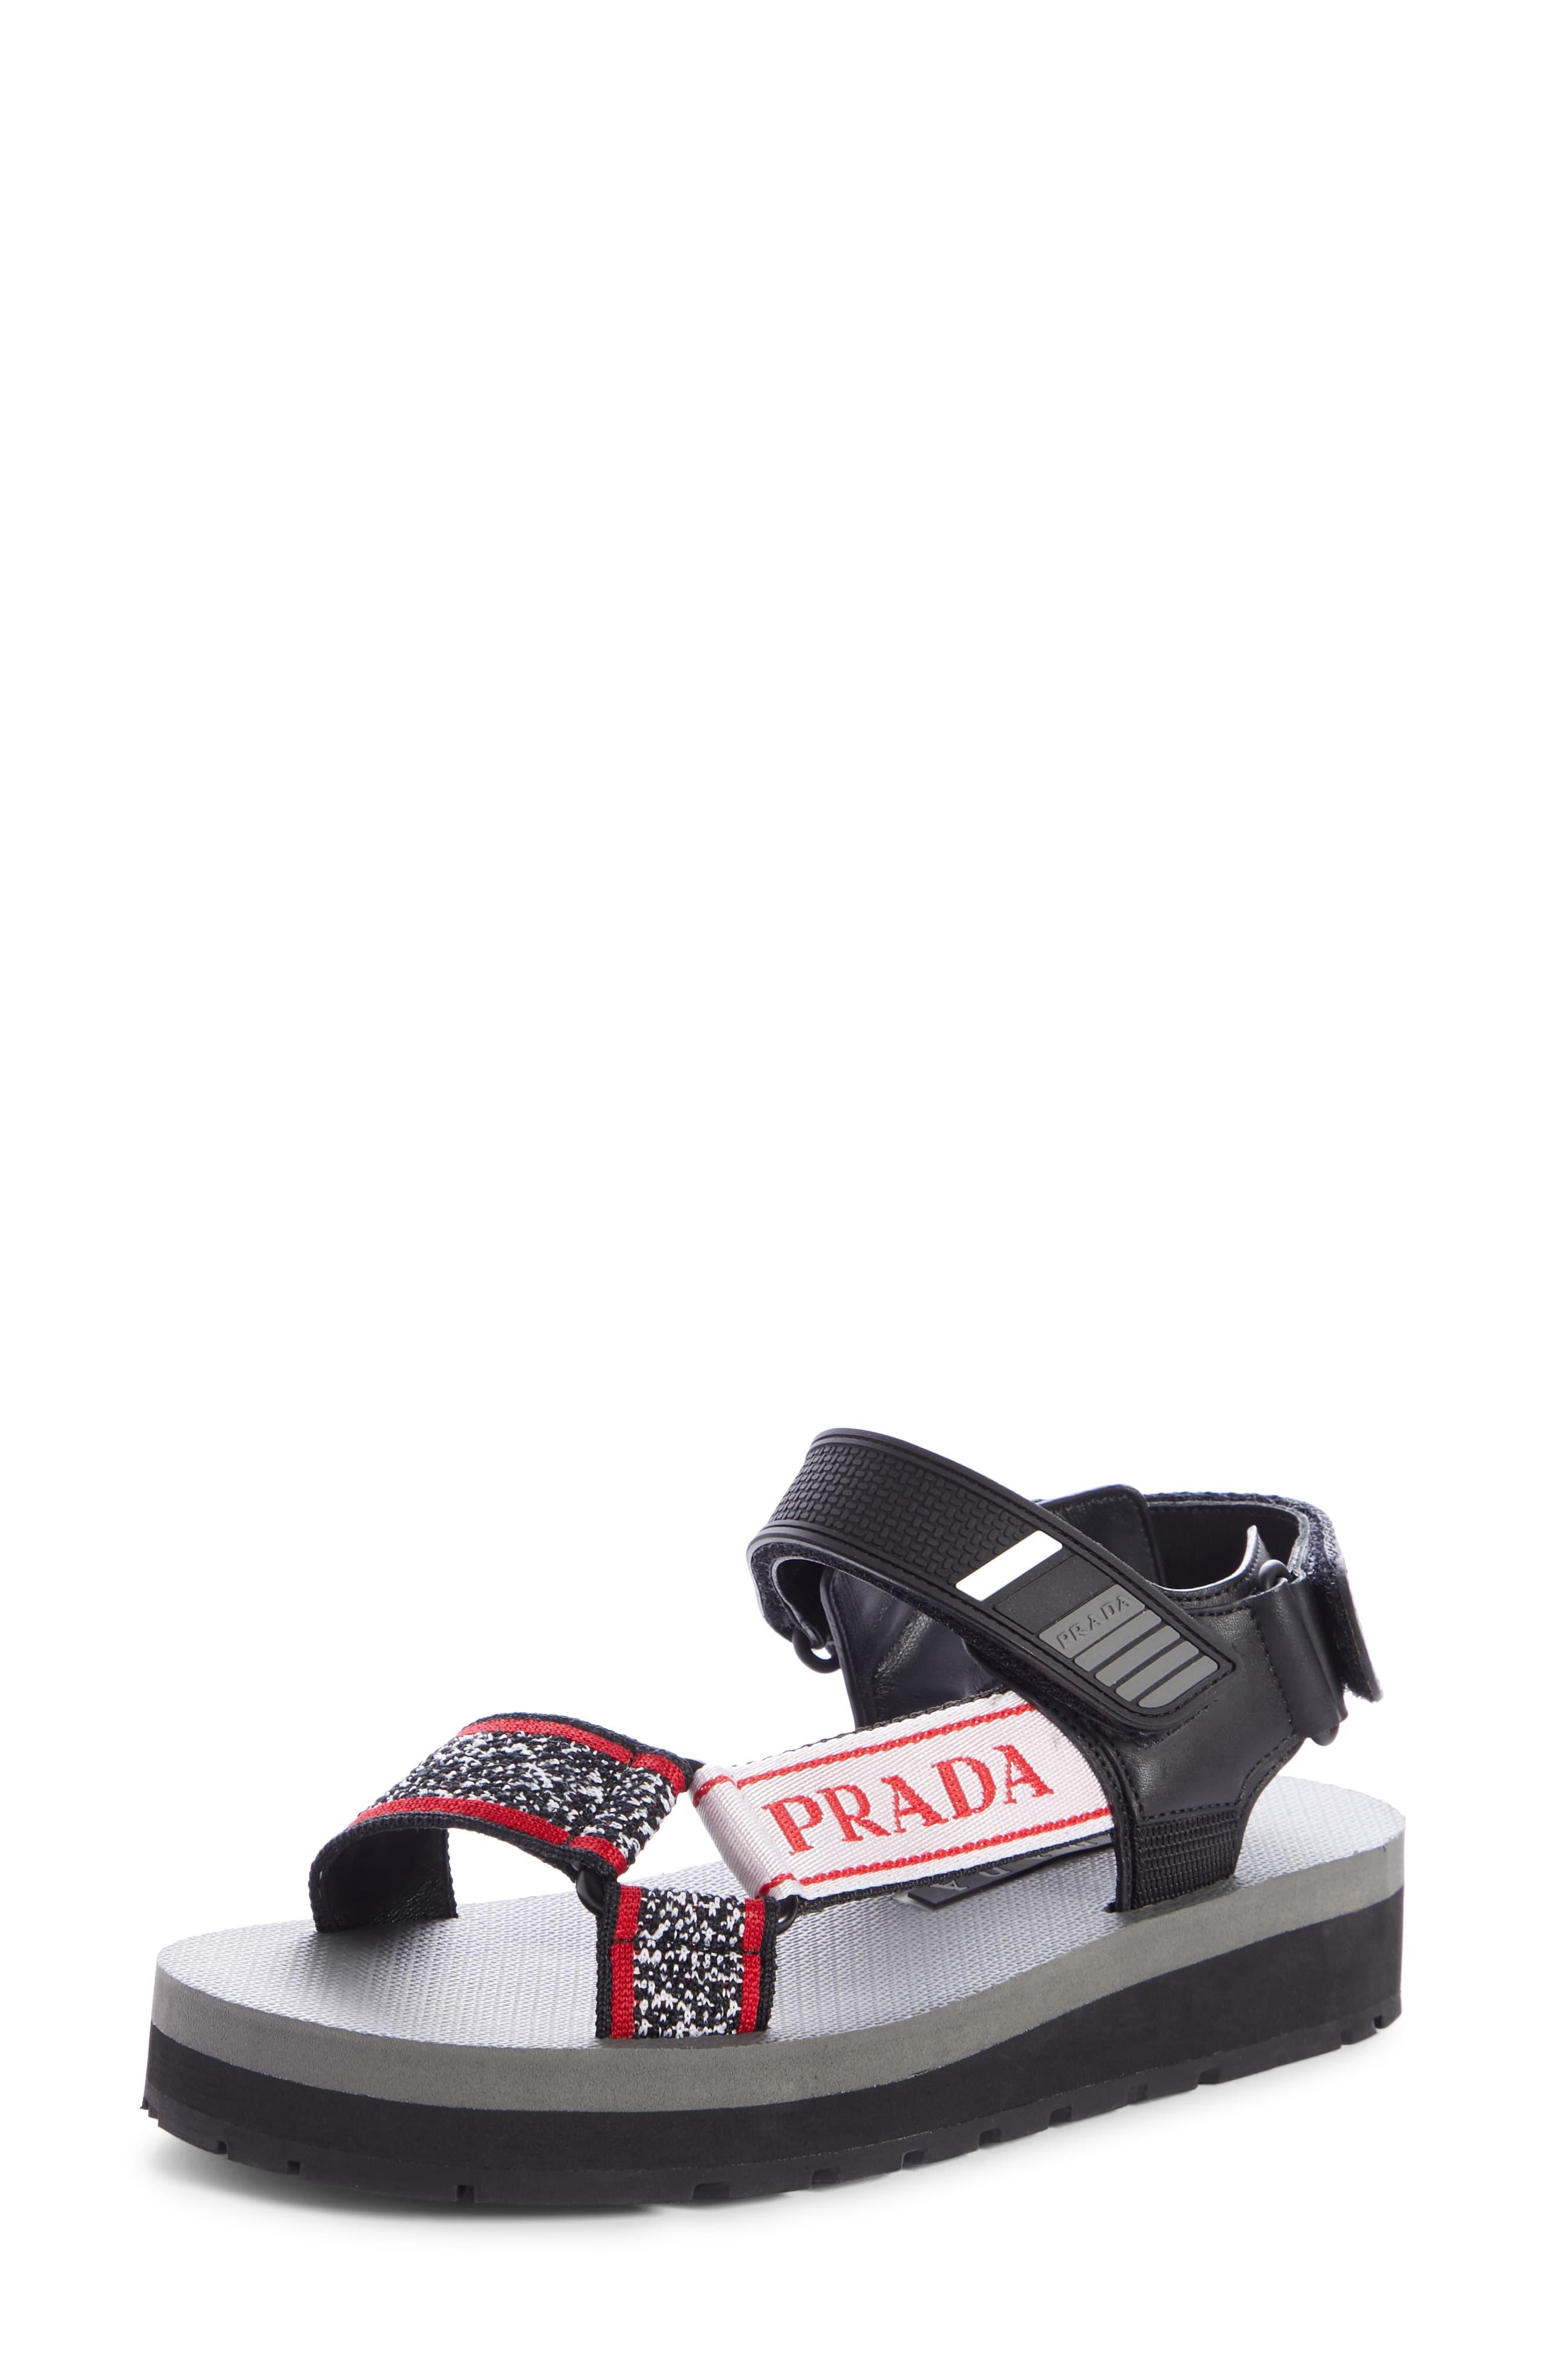 prada sports sandals